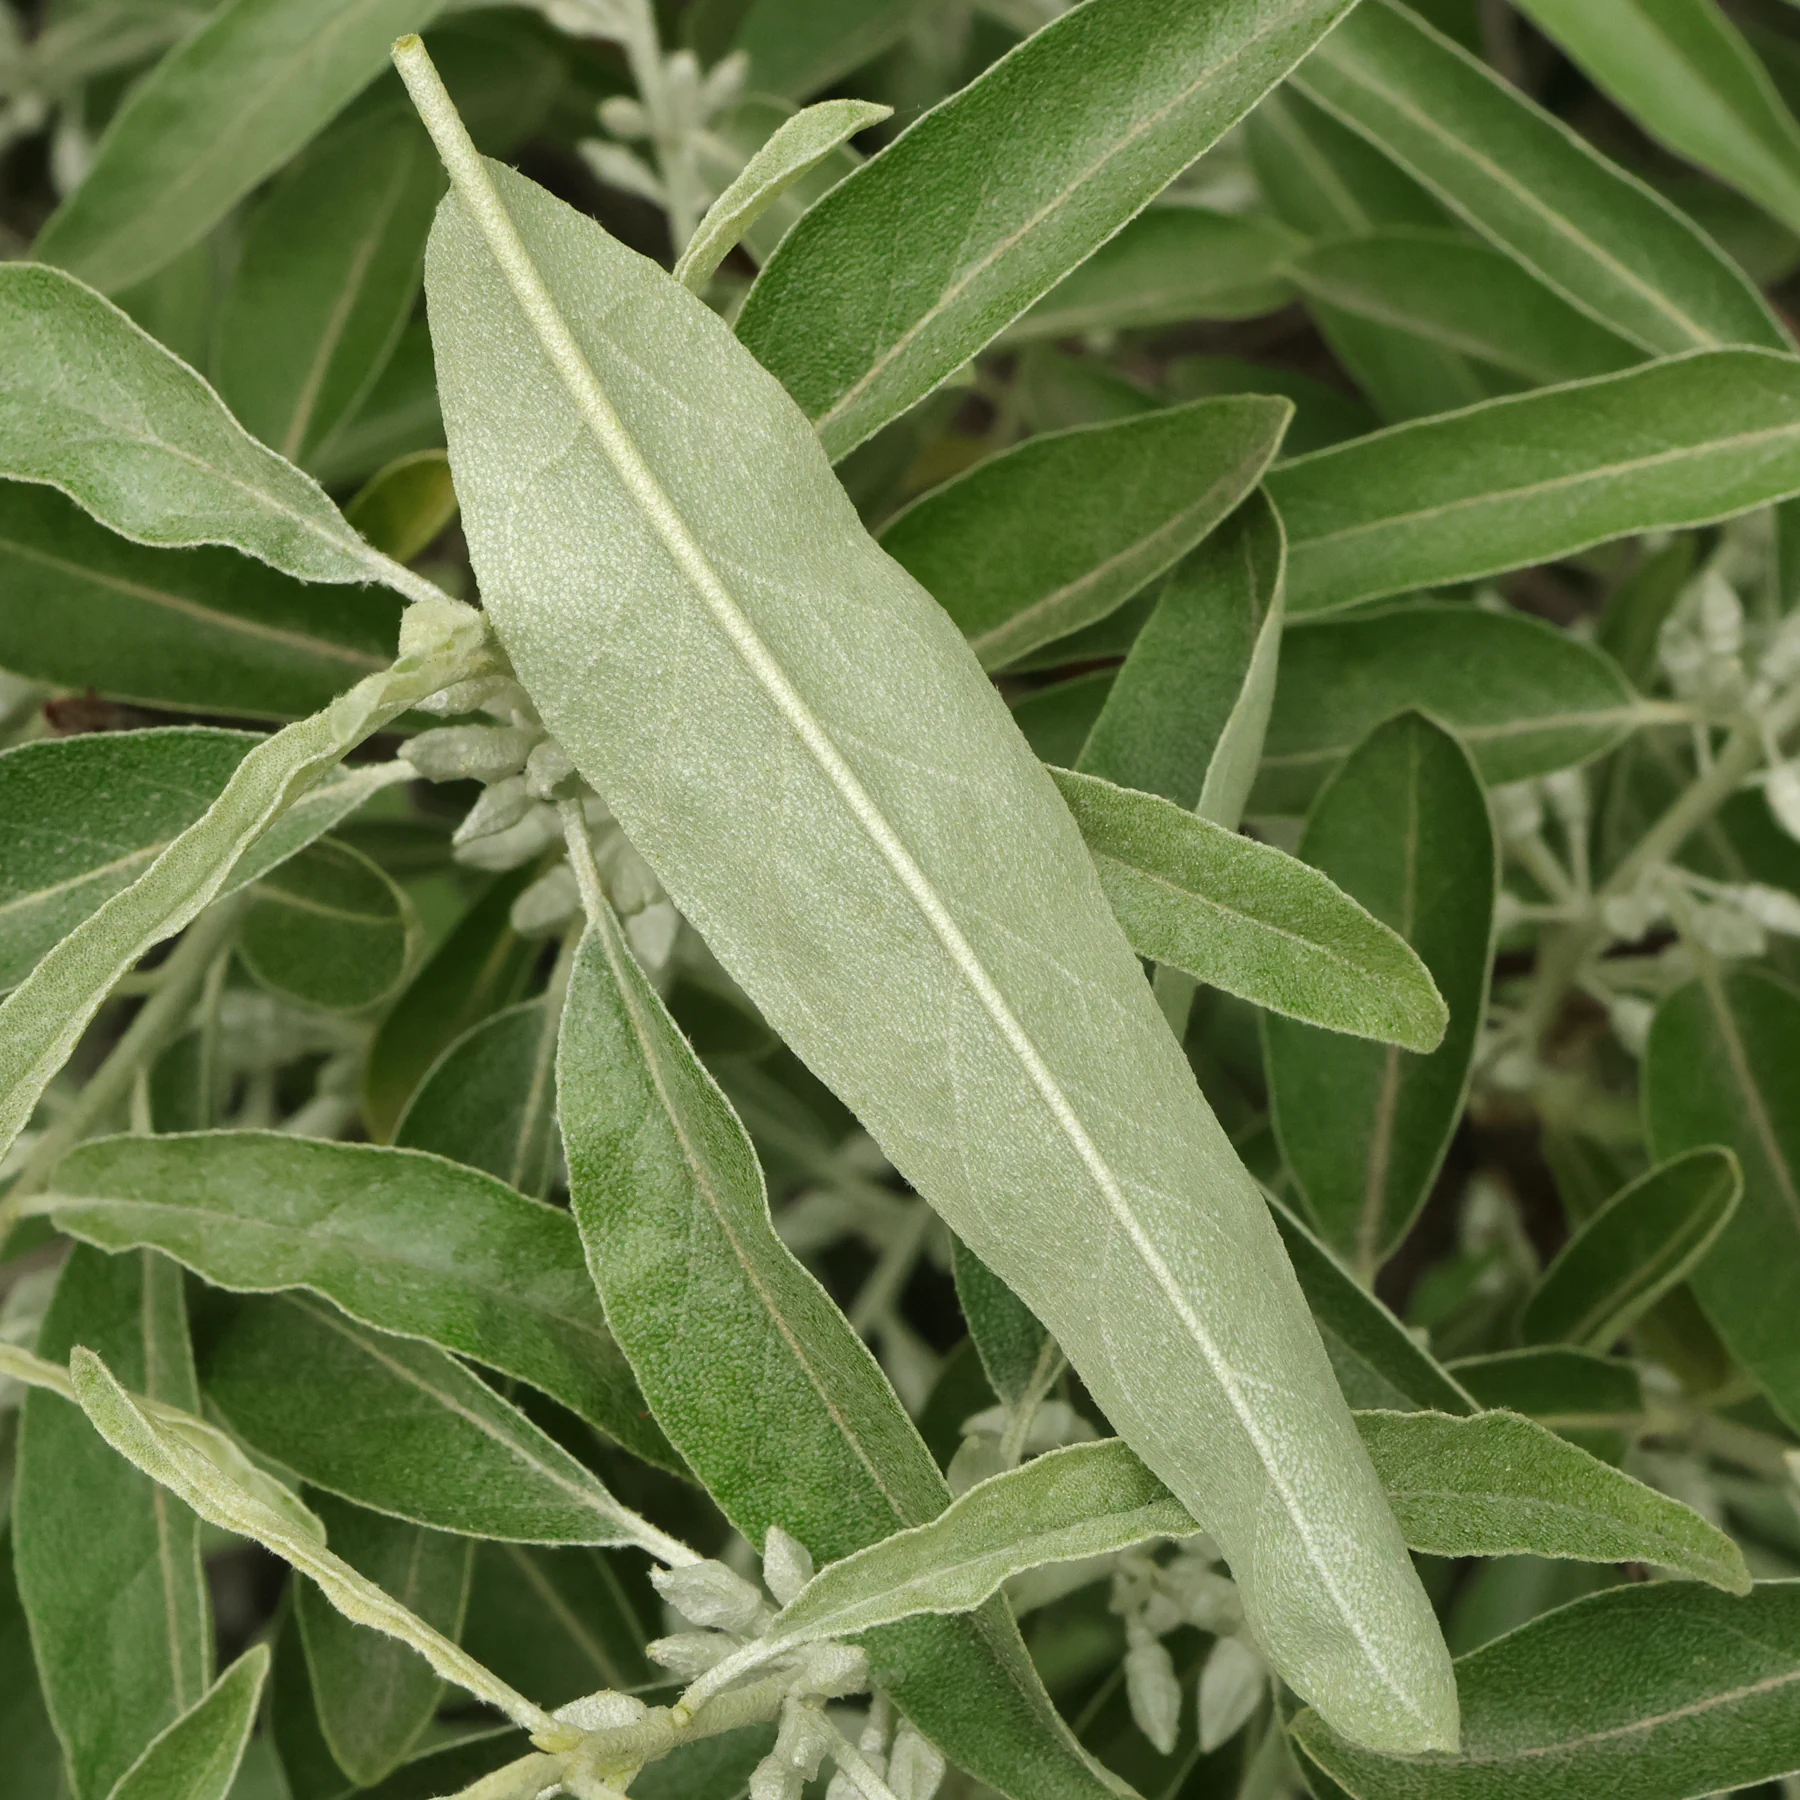 Russian olive leaf bottom